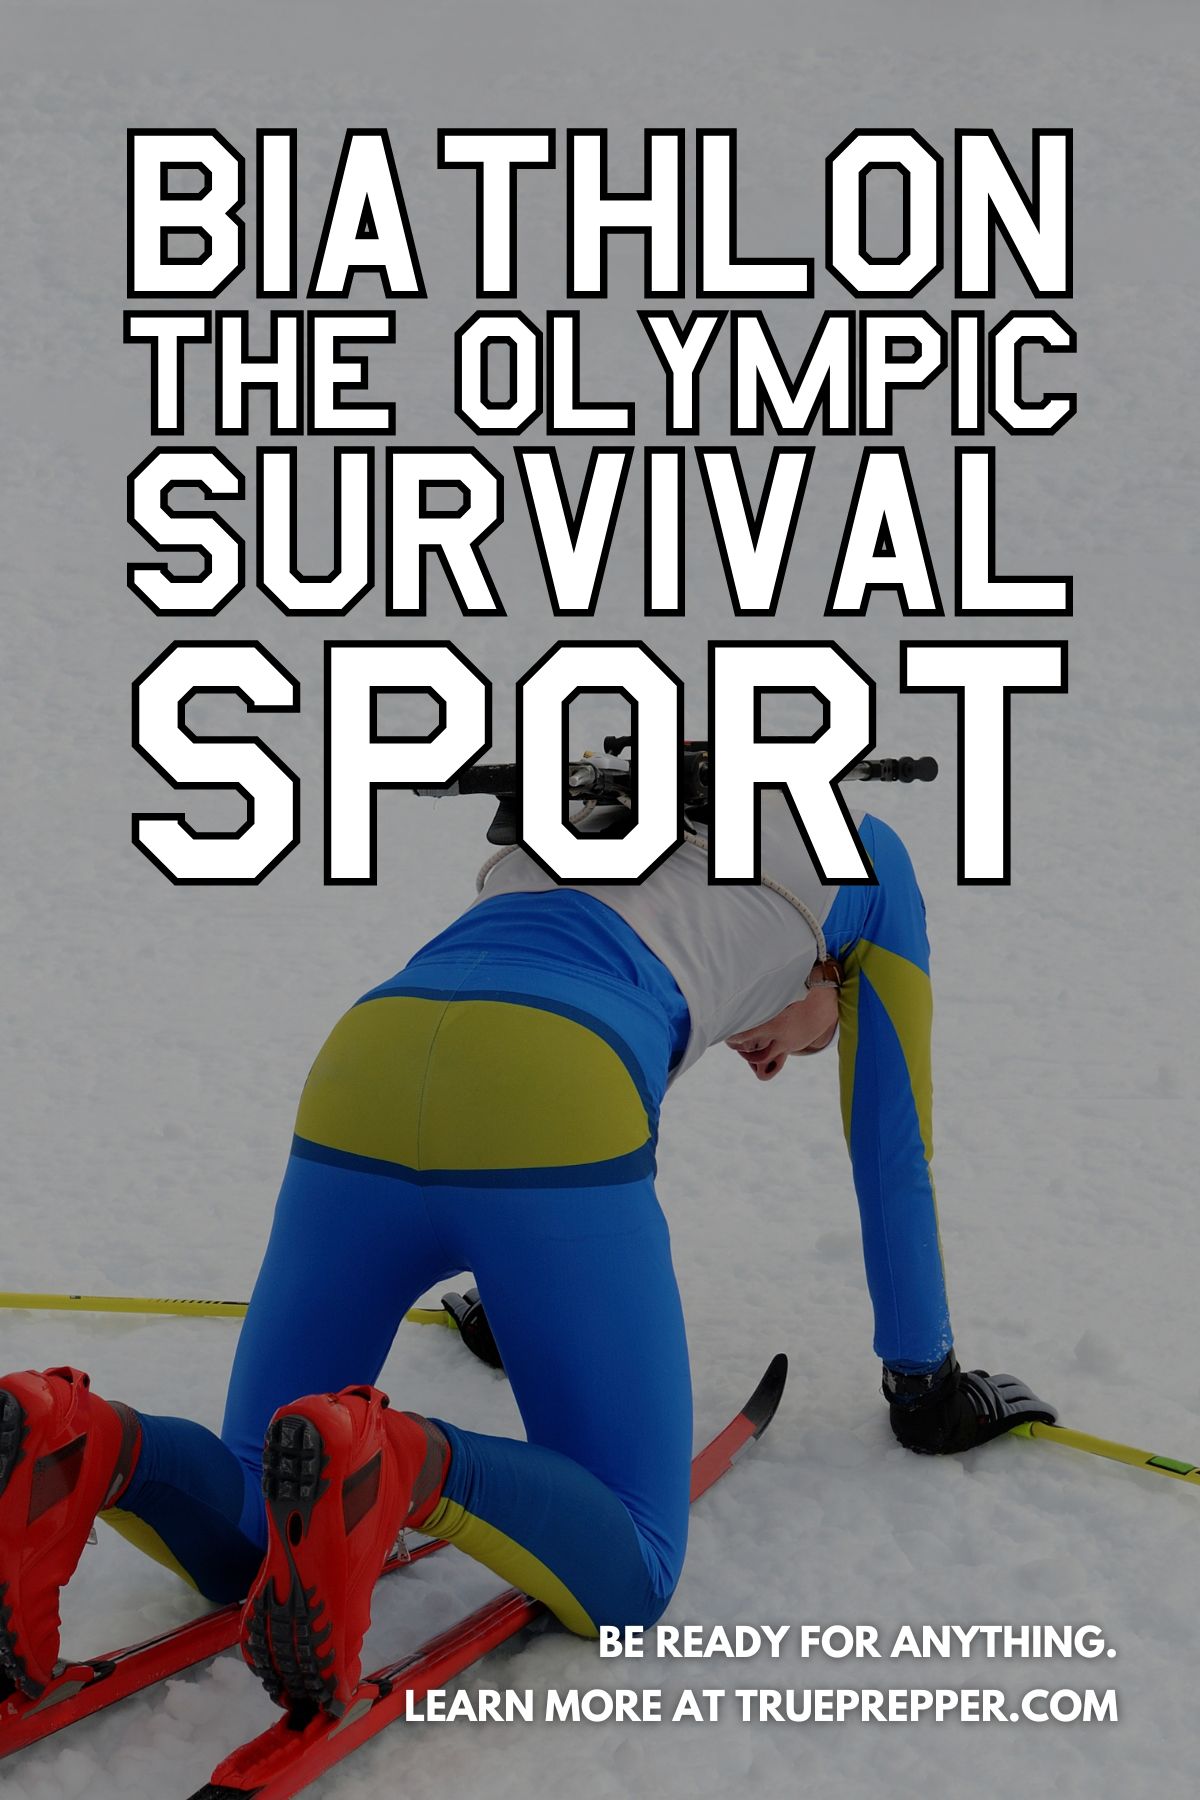 Biathlon: the Olympic Survival Sport